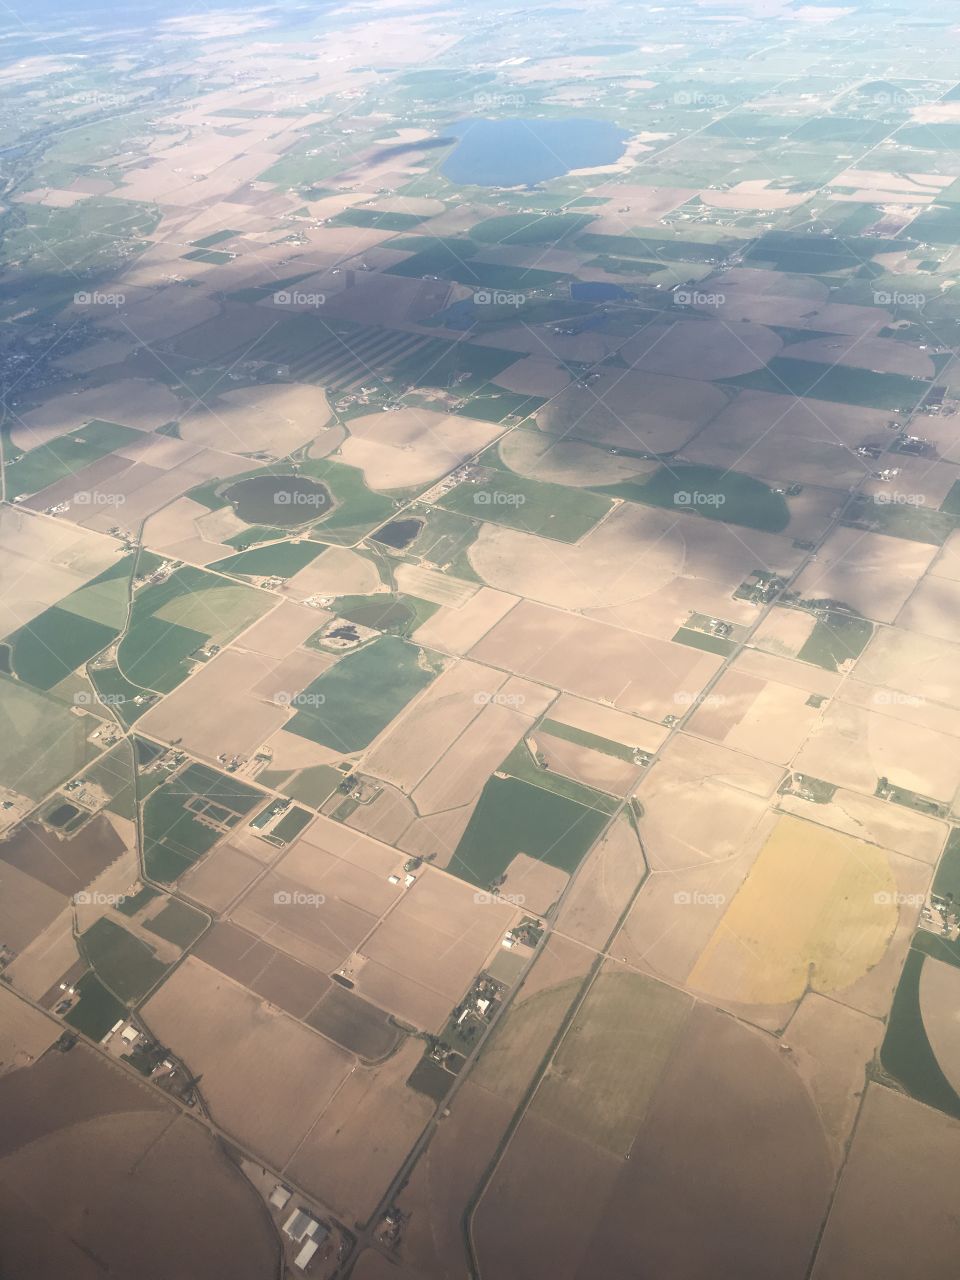 Airplane view of Denver Colorado country side